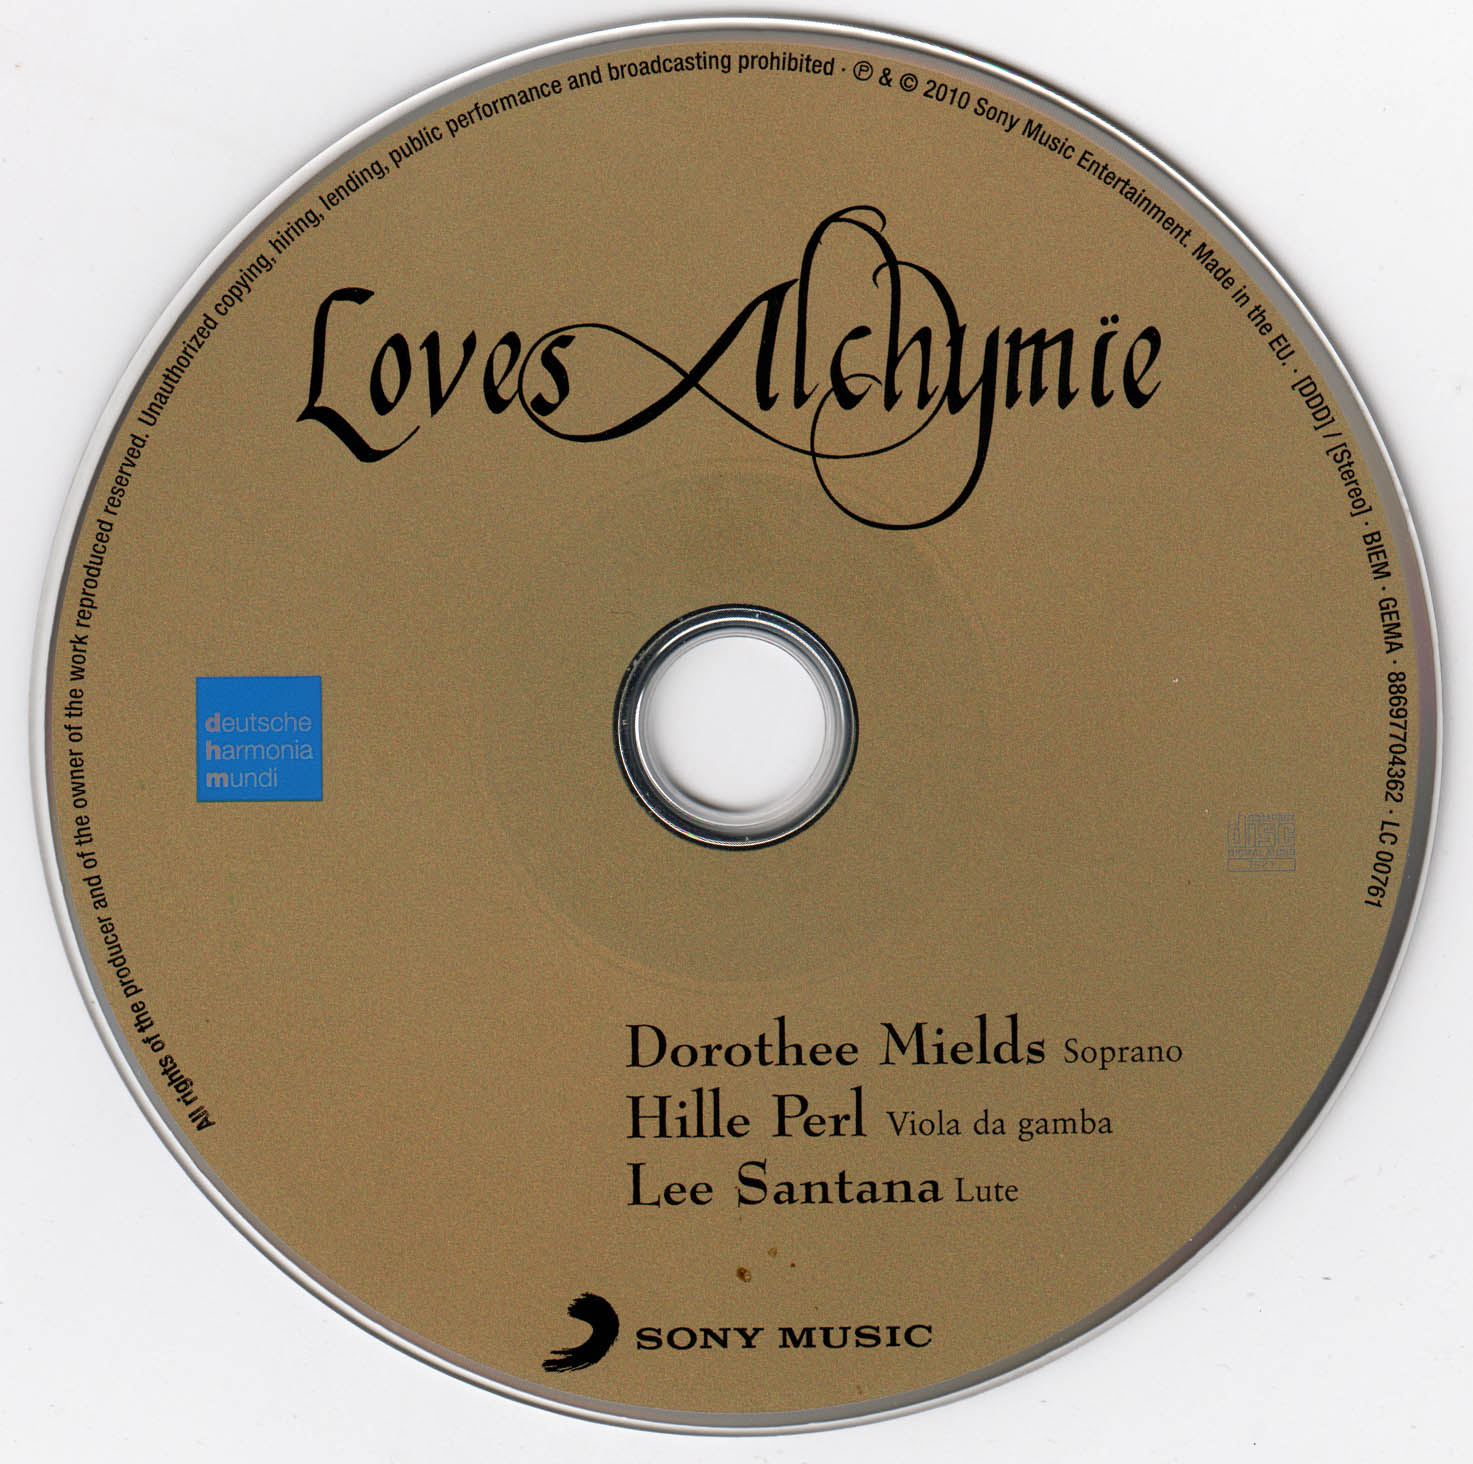 Dowland et al. - Loves Alchymie - Dorothee Mields, soprano; Hille Perl, viola da gamba